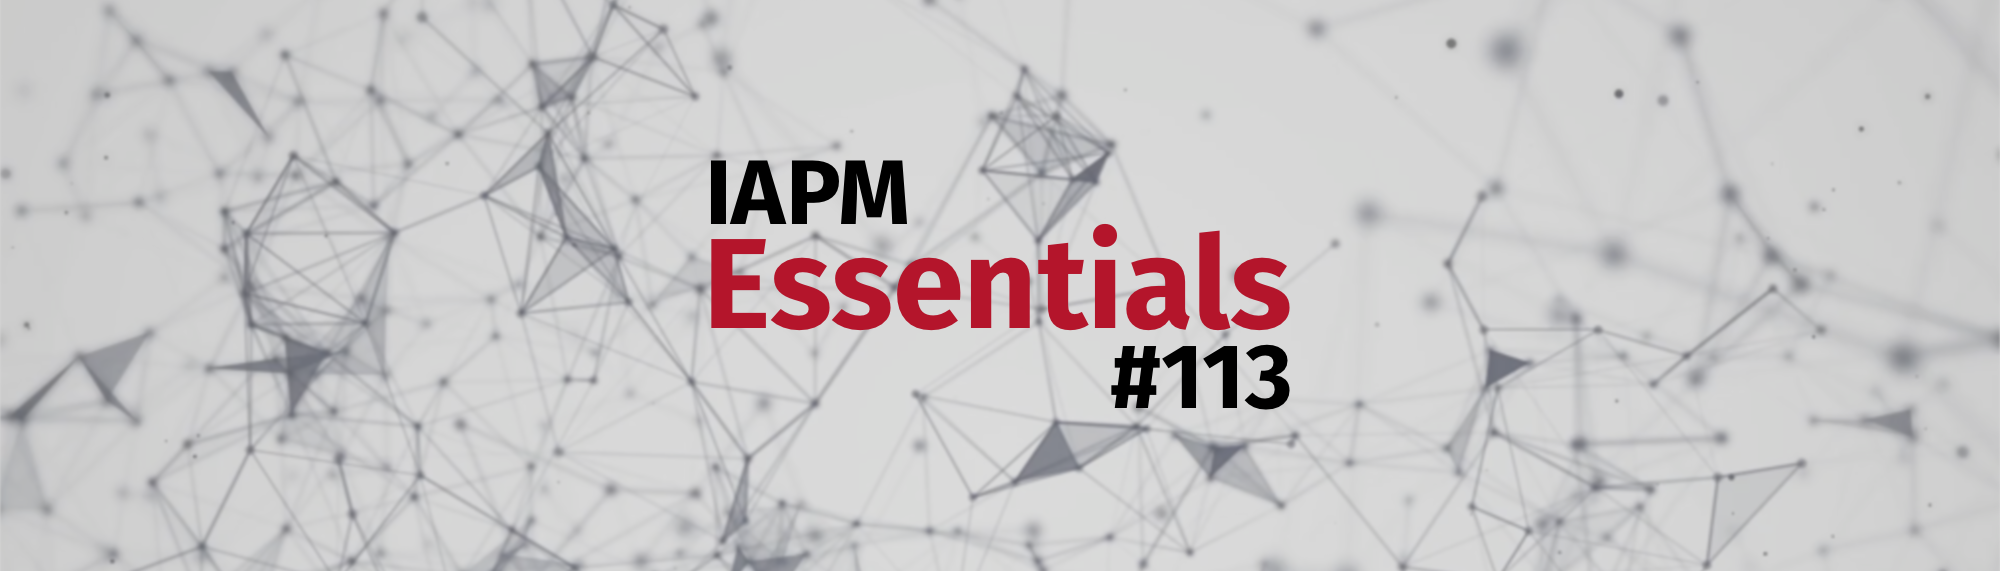 IAPM Essentials #113 - PM Neuigkeiten | IAPM